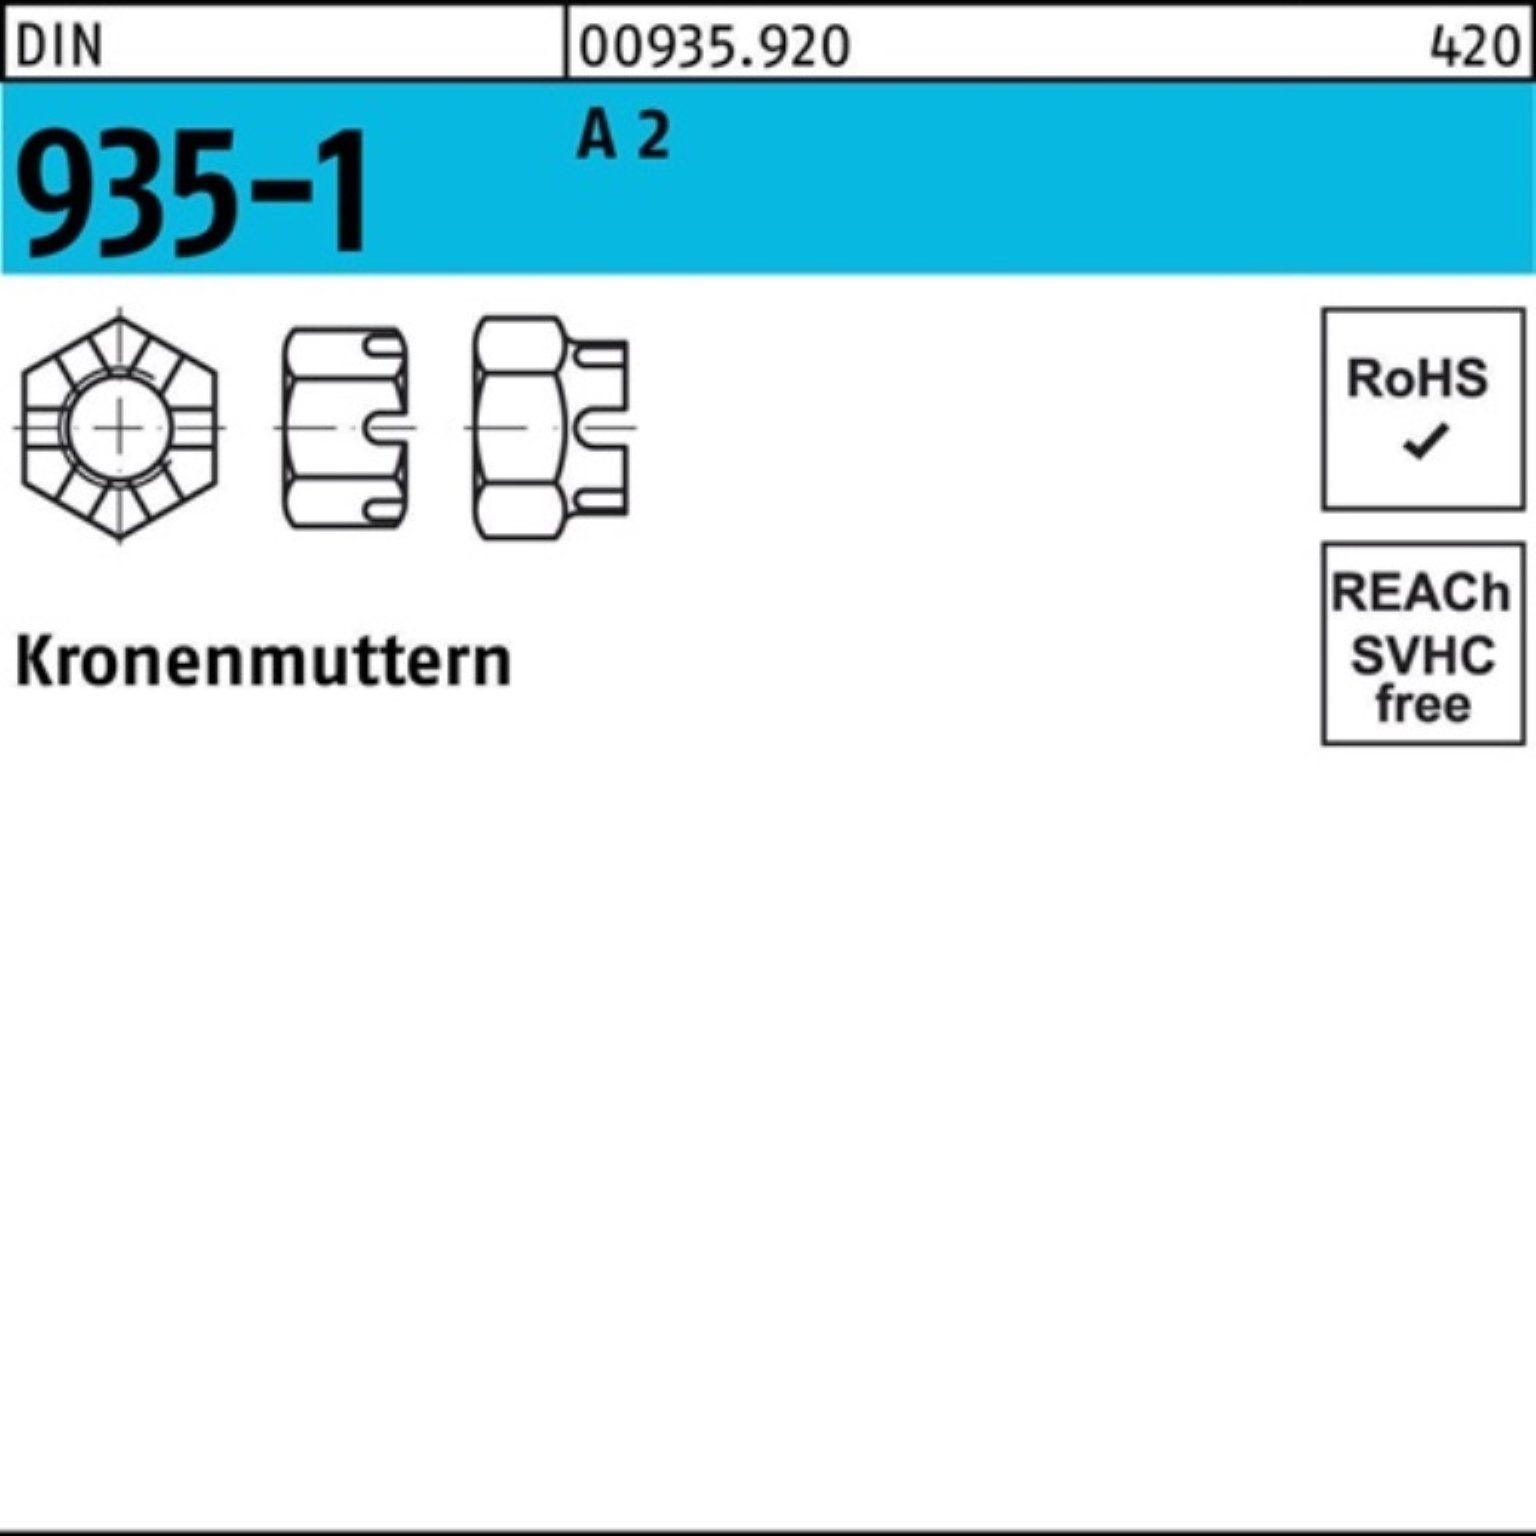 Reyher Kronenmutter 100er Pack Kronenmutter DIN 935-1 M8 A 2 25 Stück DIN 935-1 A 2 Krone